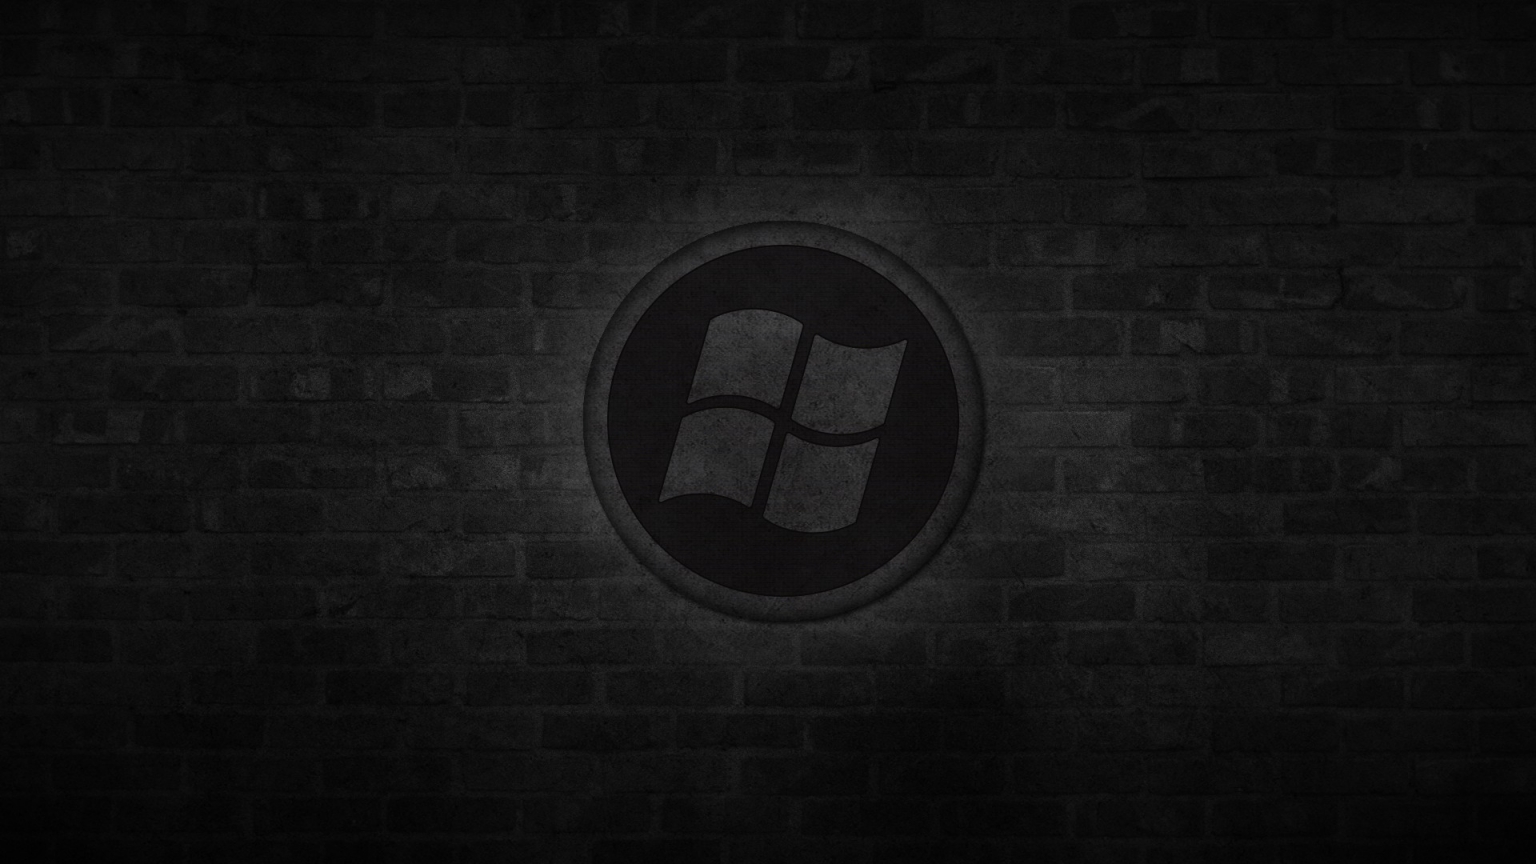 Dark Windows Logo for 1536 x 864 HDTV resolution